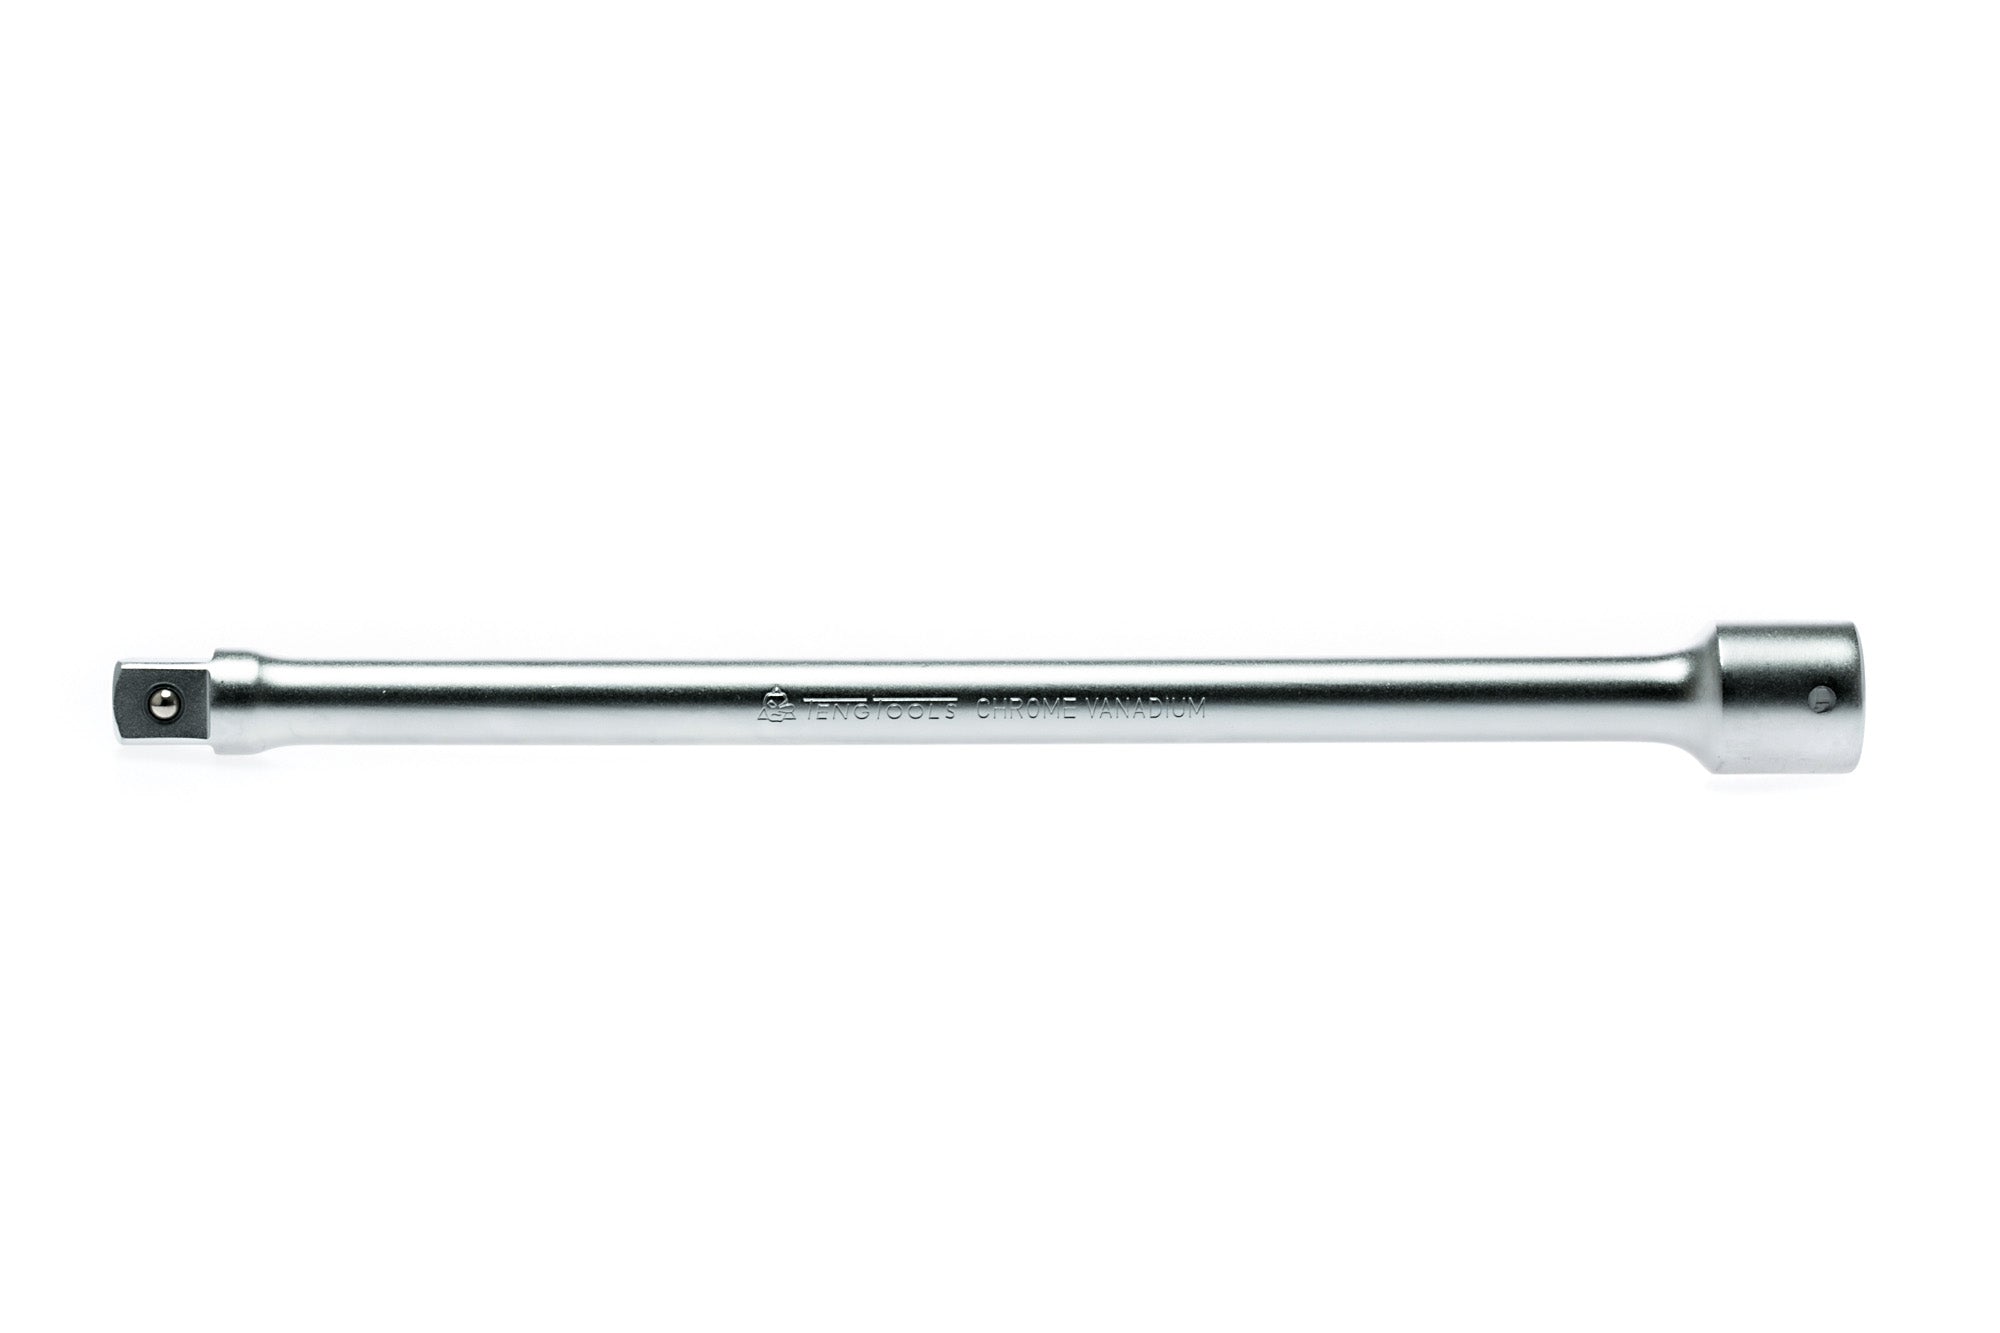 3/4 Inch Drive Extension Bars Made Of Chrome Vanadium Steel - 4